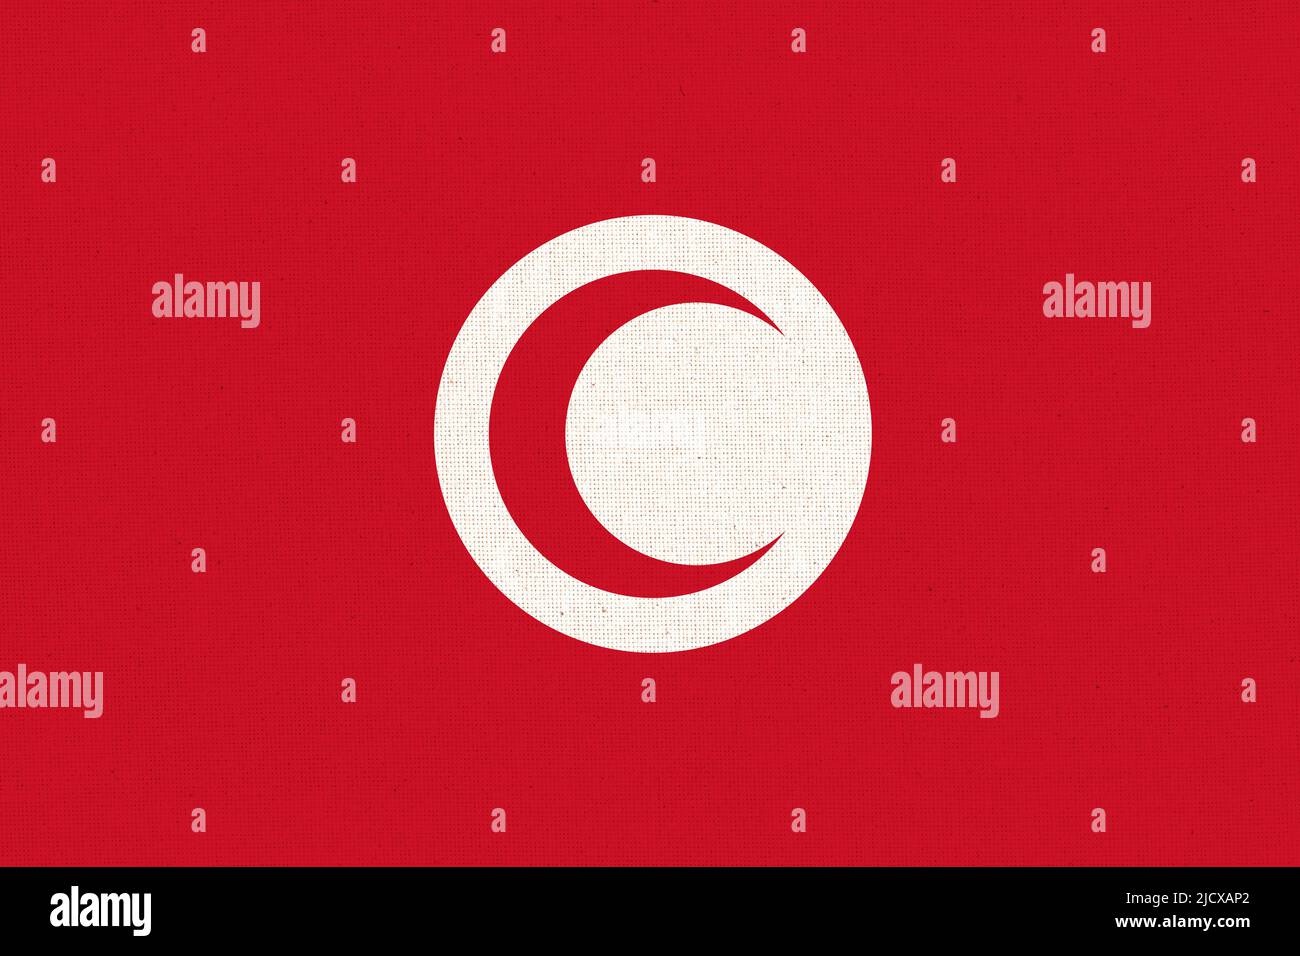 Flag of Tunisia. Tunisian flag on fabric surface. Fabric texture. National symbol of Tunisia on patterned background. Republic of Tunisia Stock Photo